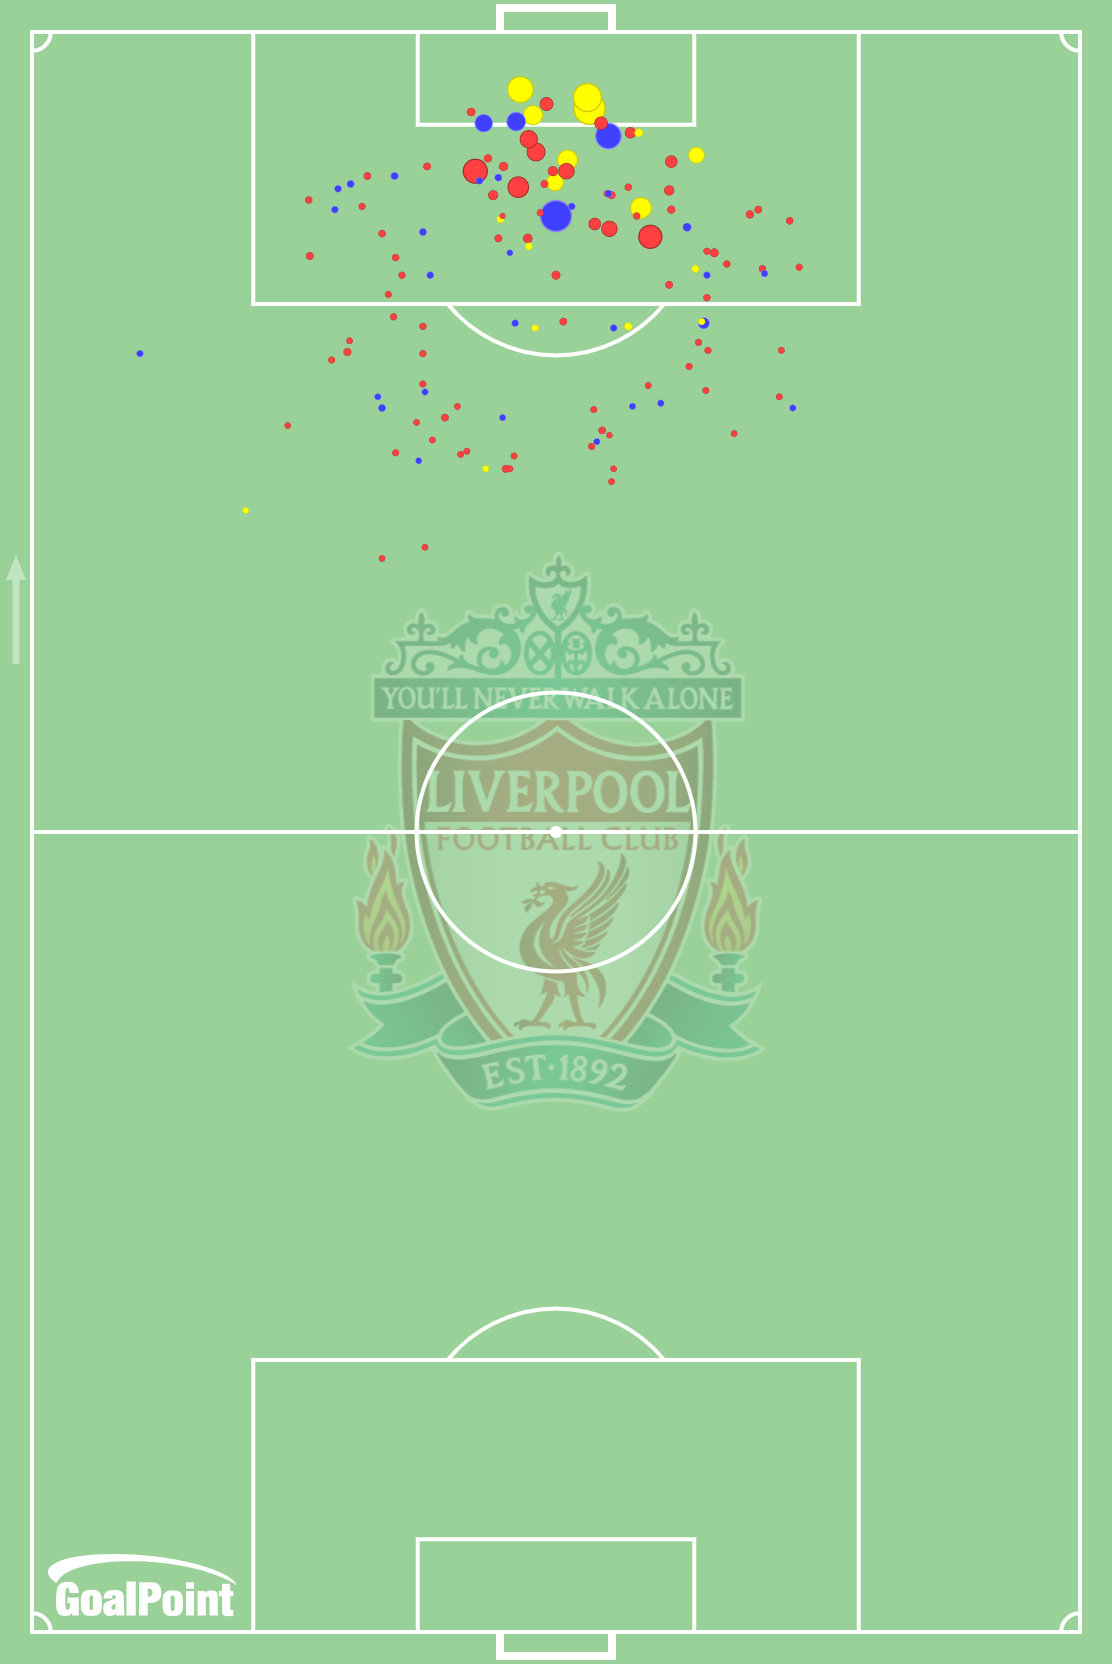 GoalPoint-Liverpool-Shots-xG-UCL-202122